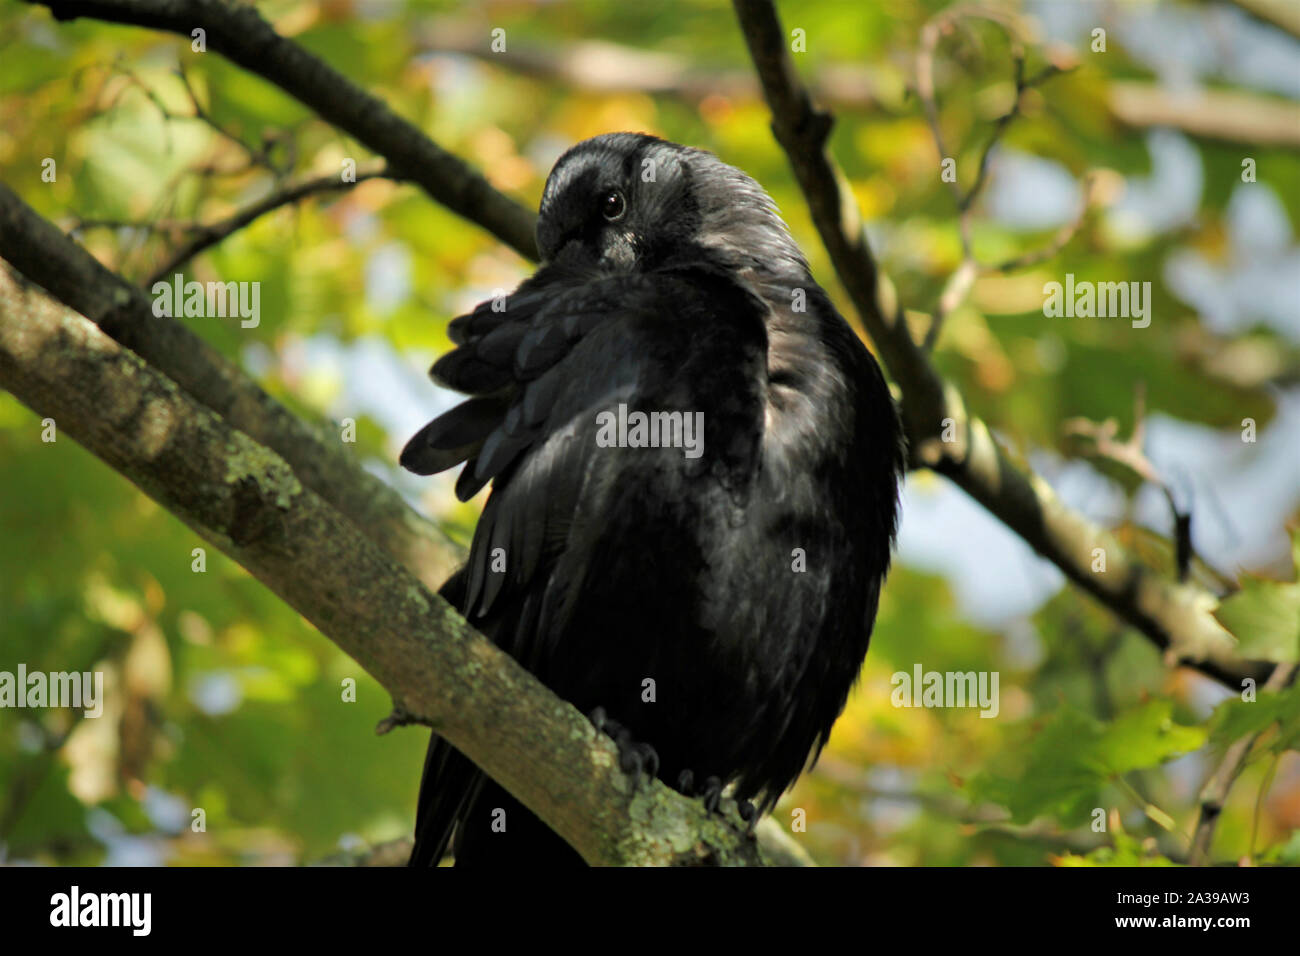 Maintenance, Carrion Crow, Nature, Autumn Stock Photo